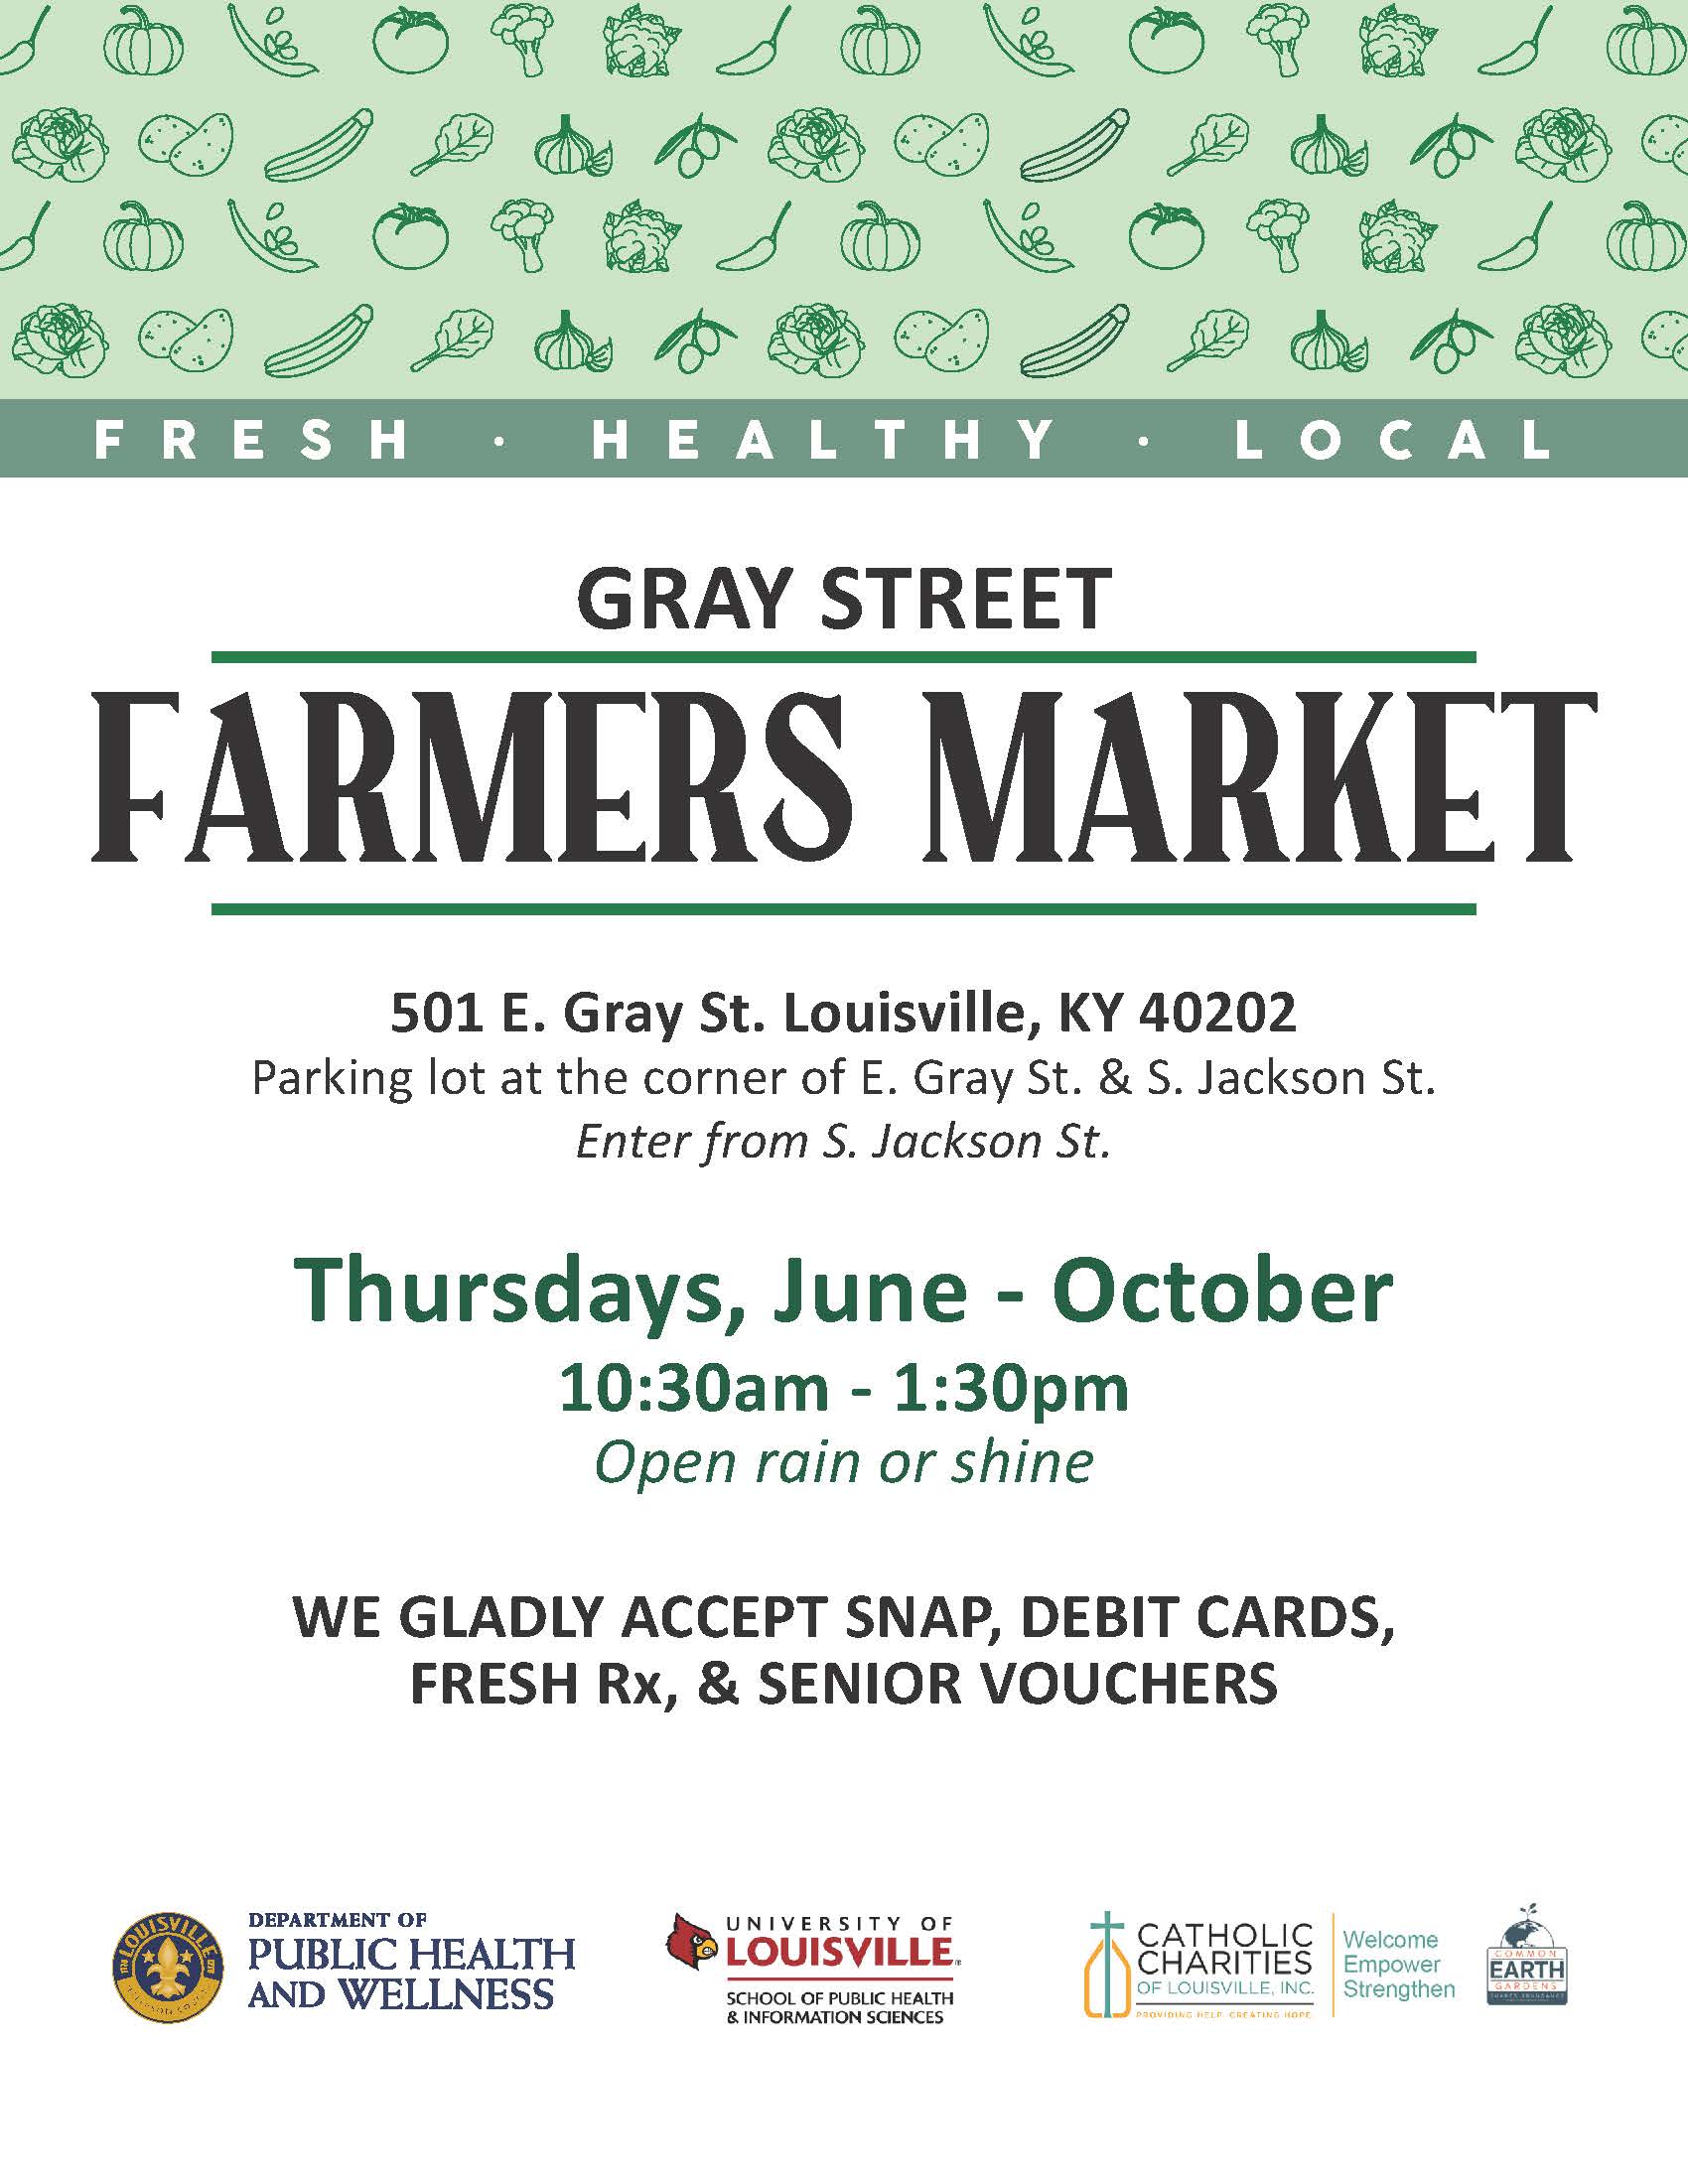 Picture of Gray Street Farmers Market flyer